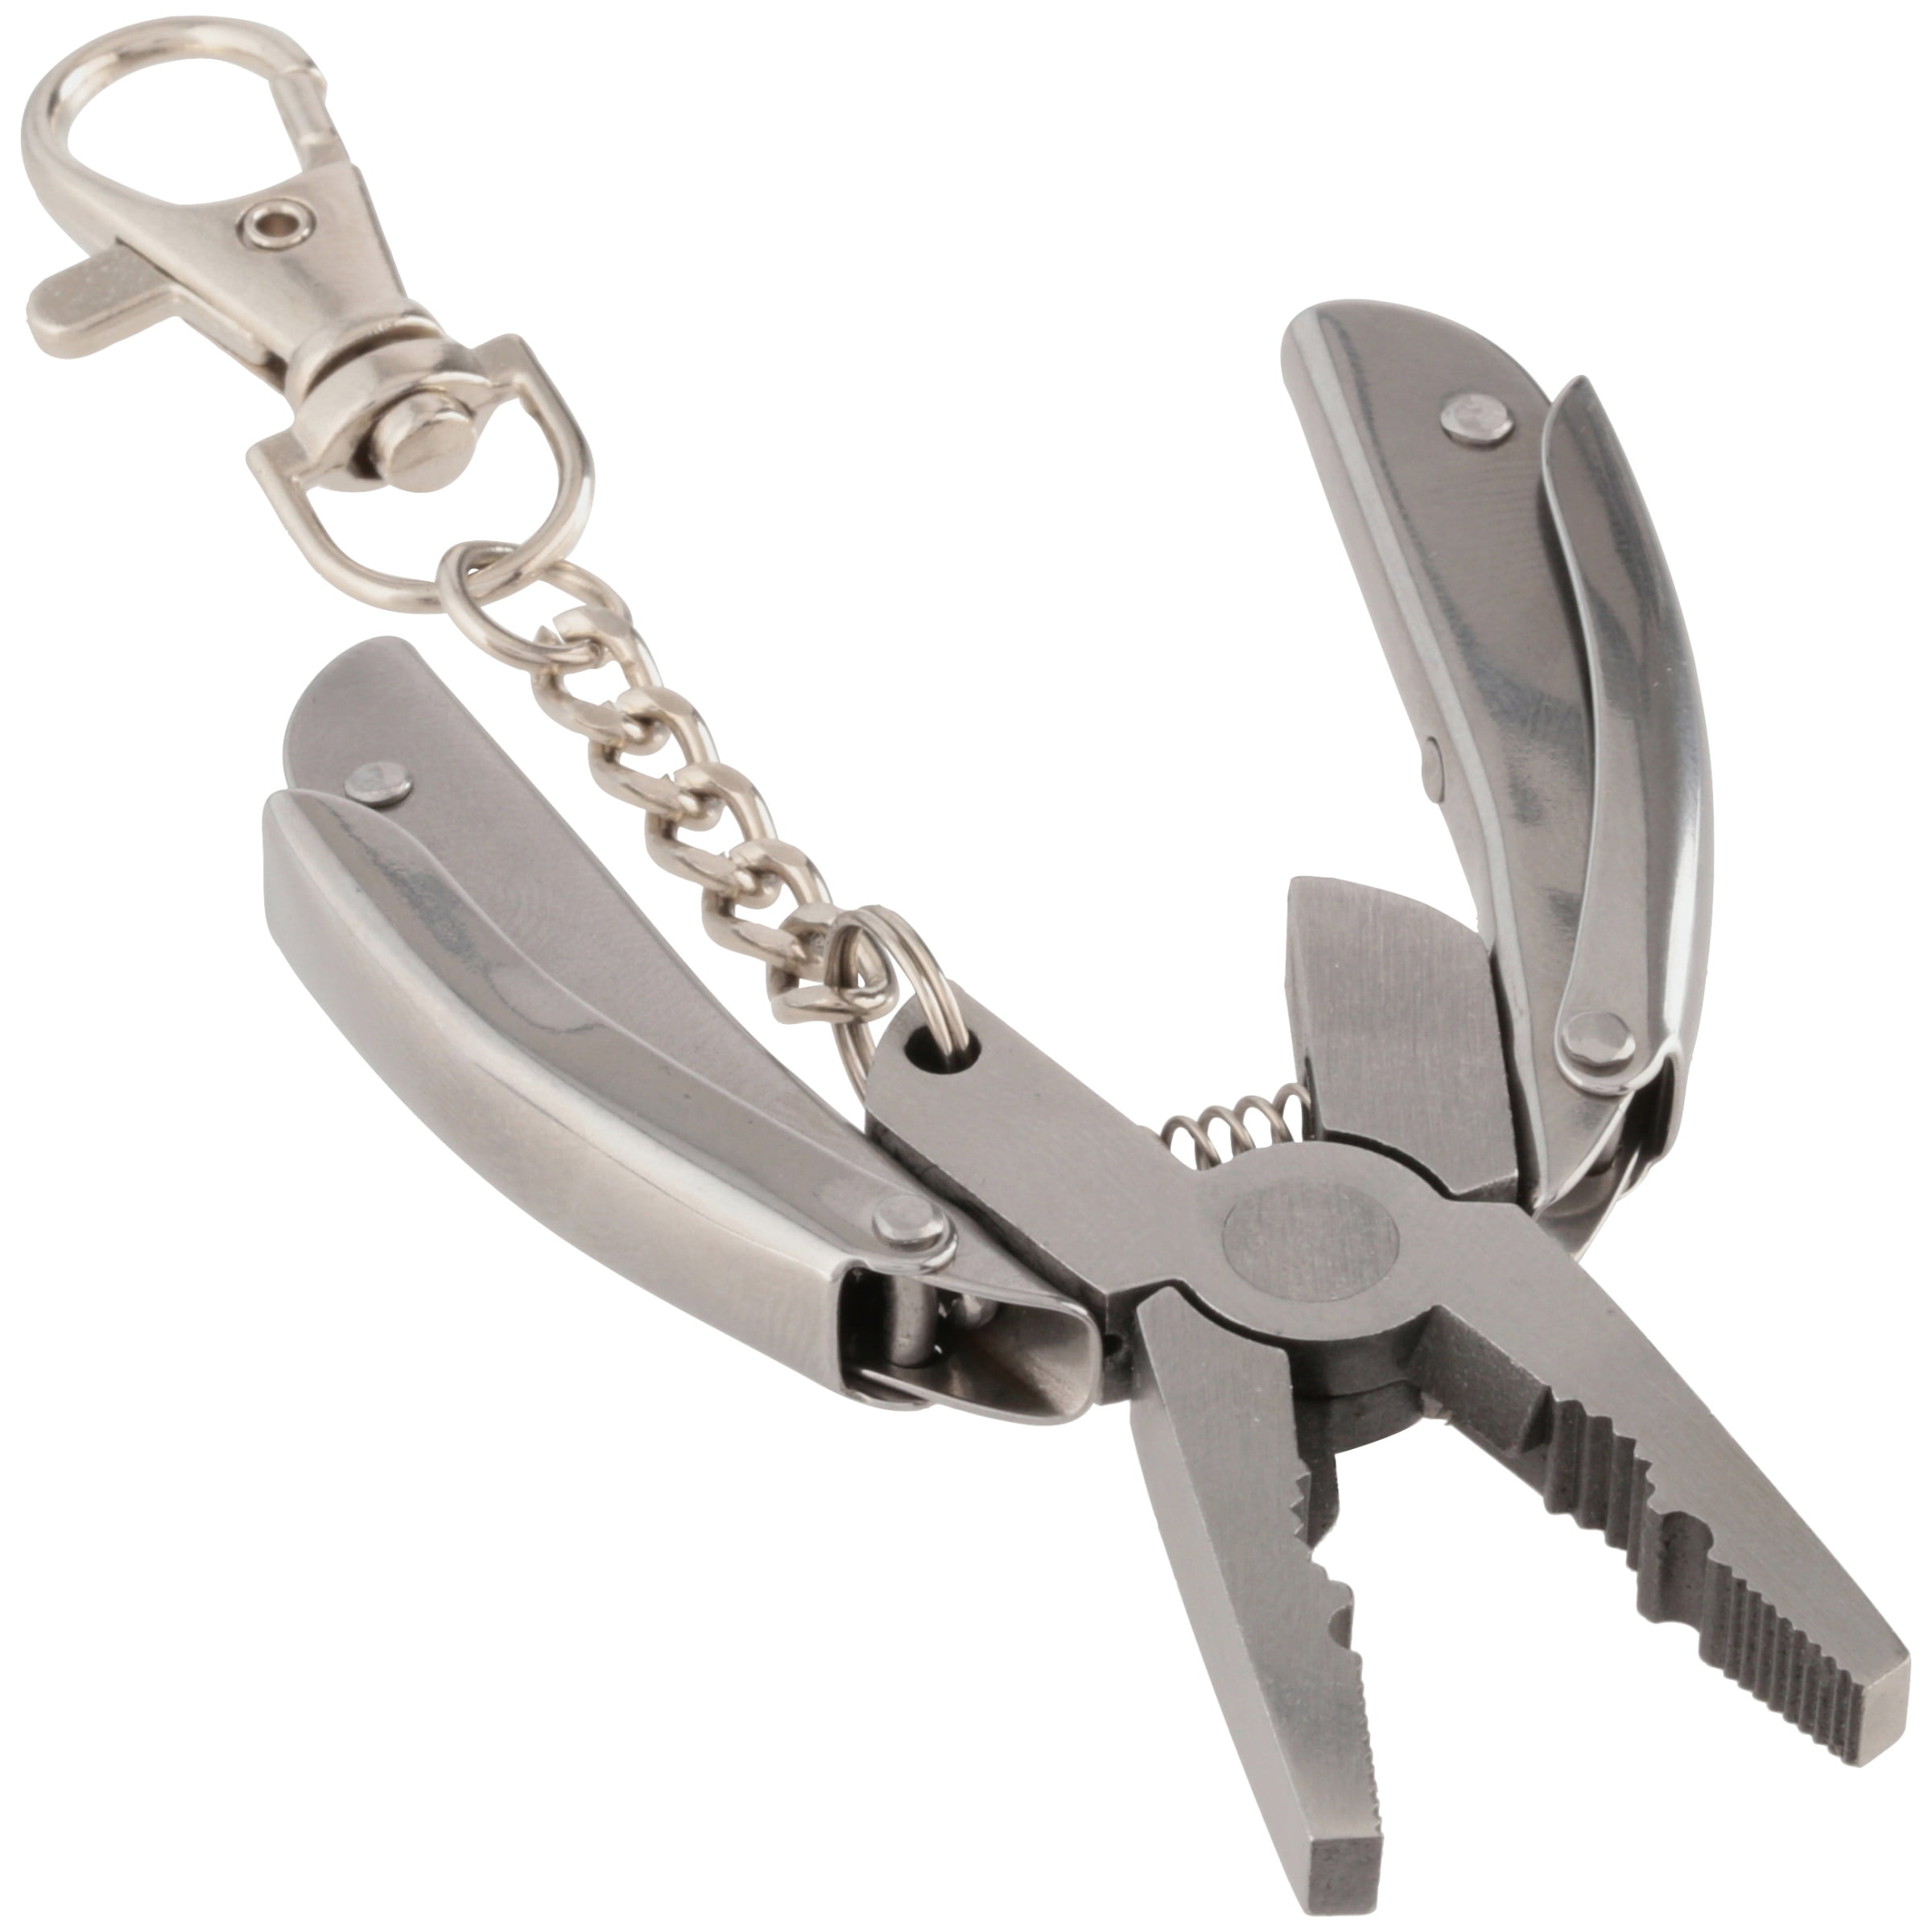 Mini Multifunctional Tool 9 in 1 Multitool Keychain Plier Screwdriver Pocket Too 